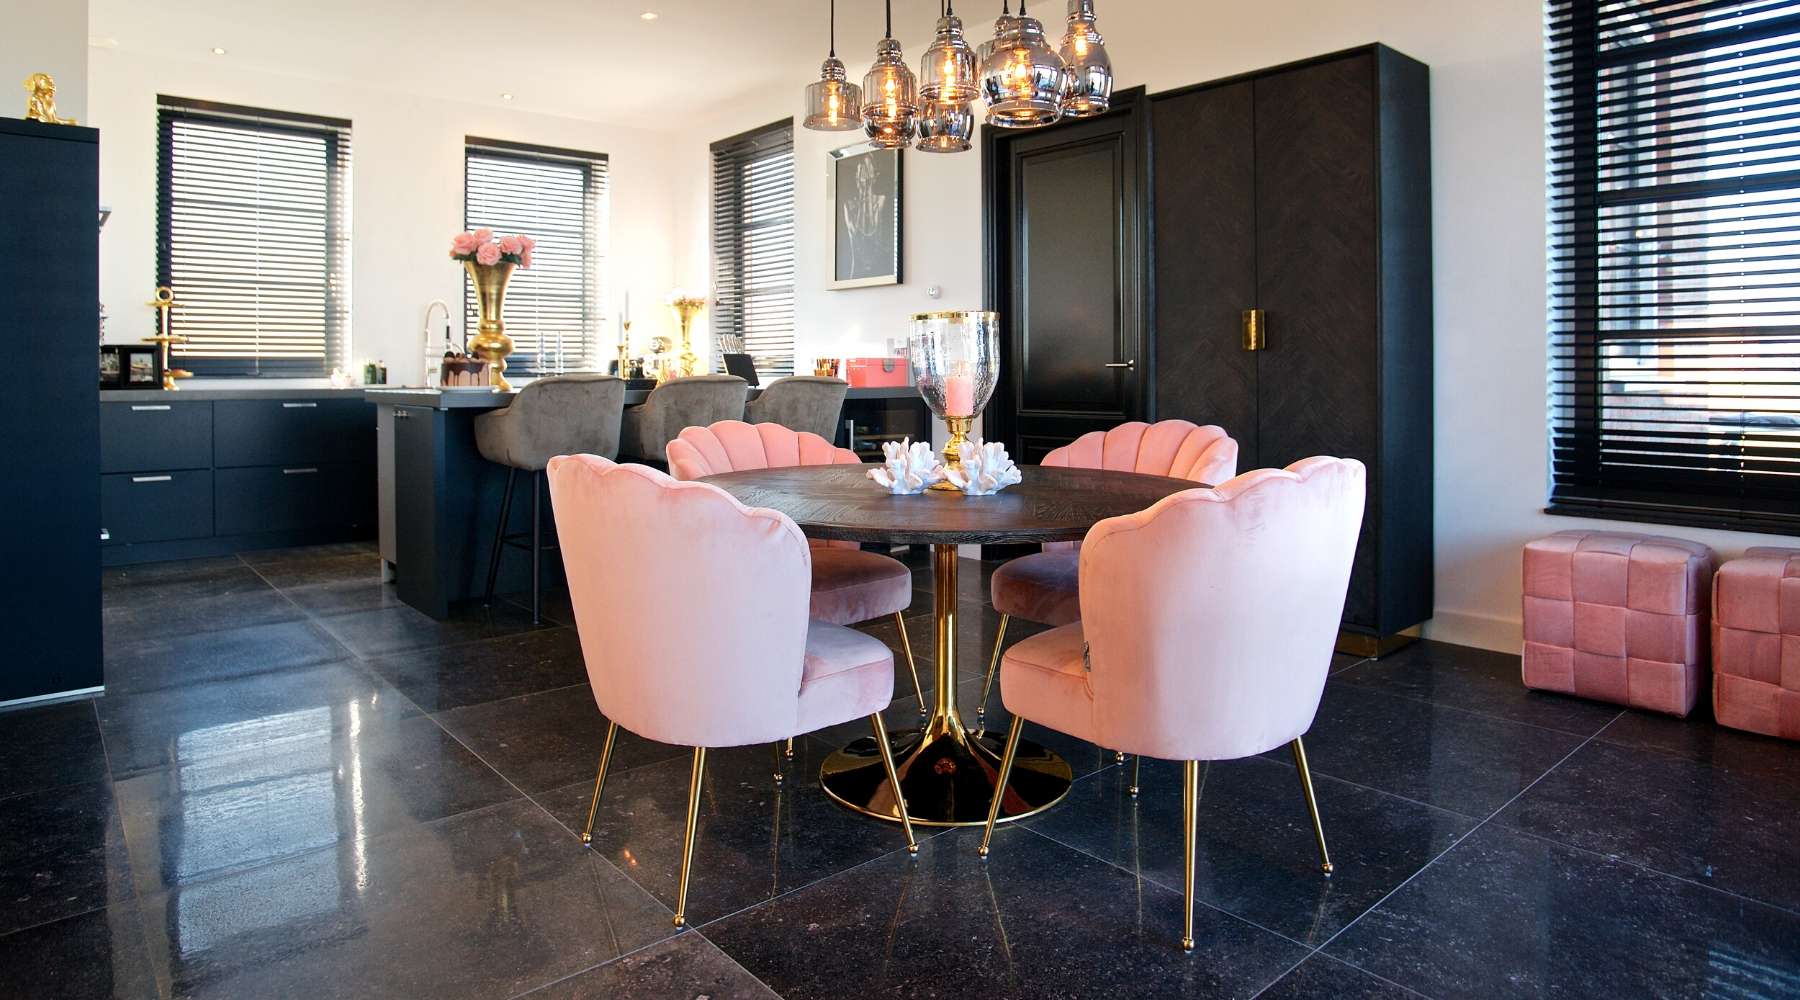 dark kitchen with dark round table and pink chairs